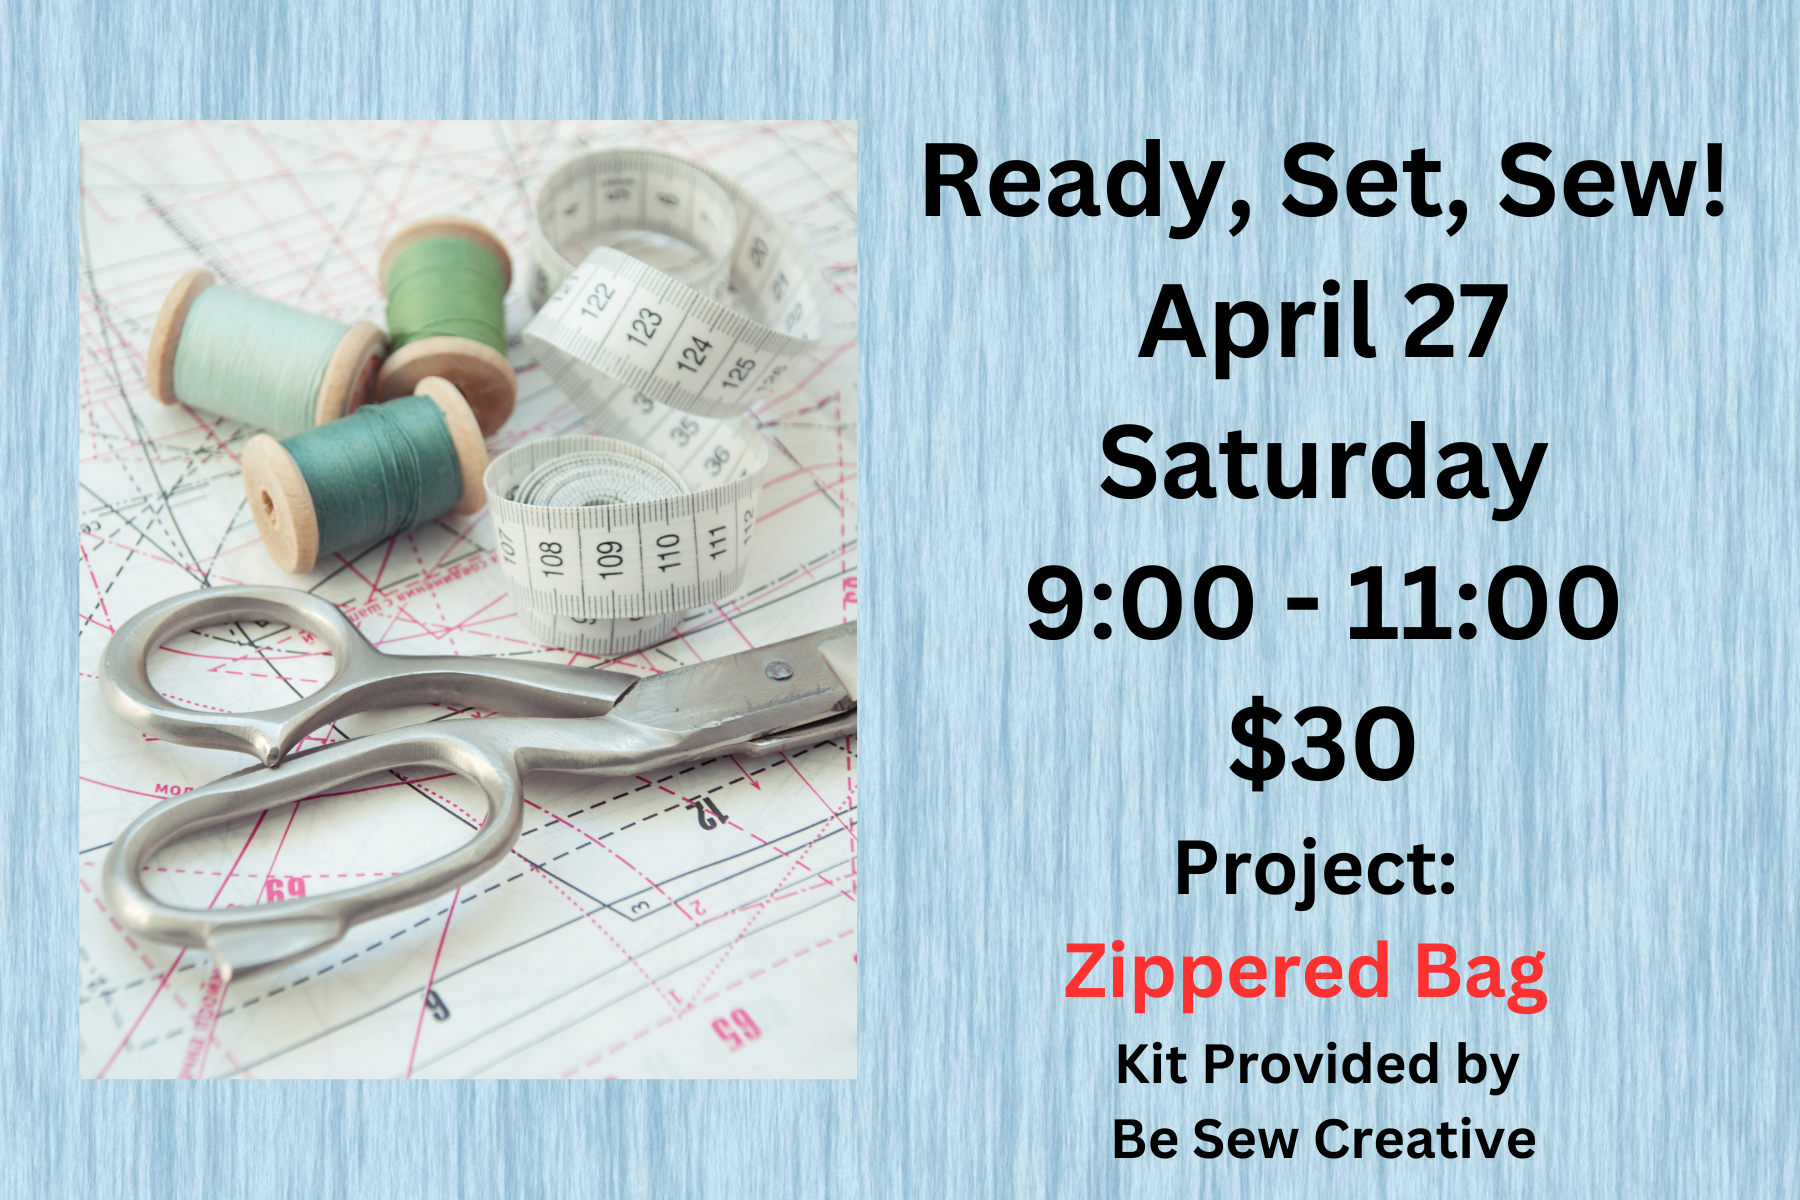 Ready Set Sew - April 24 - Zippered Bag 9:00 - 11:00